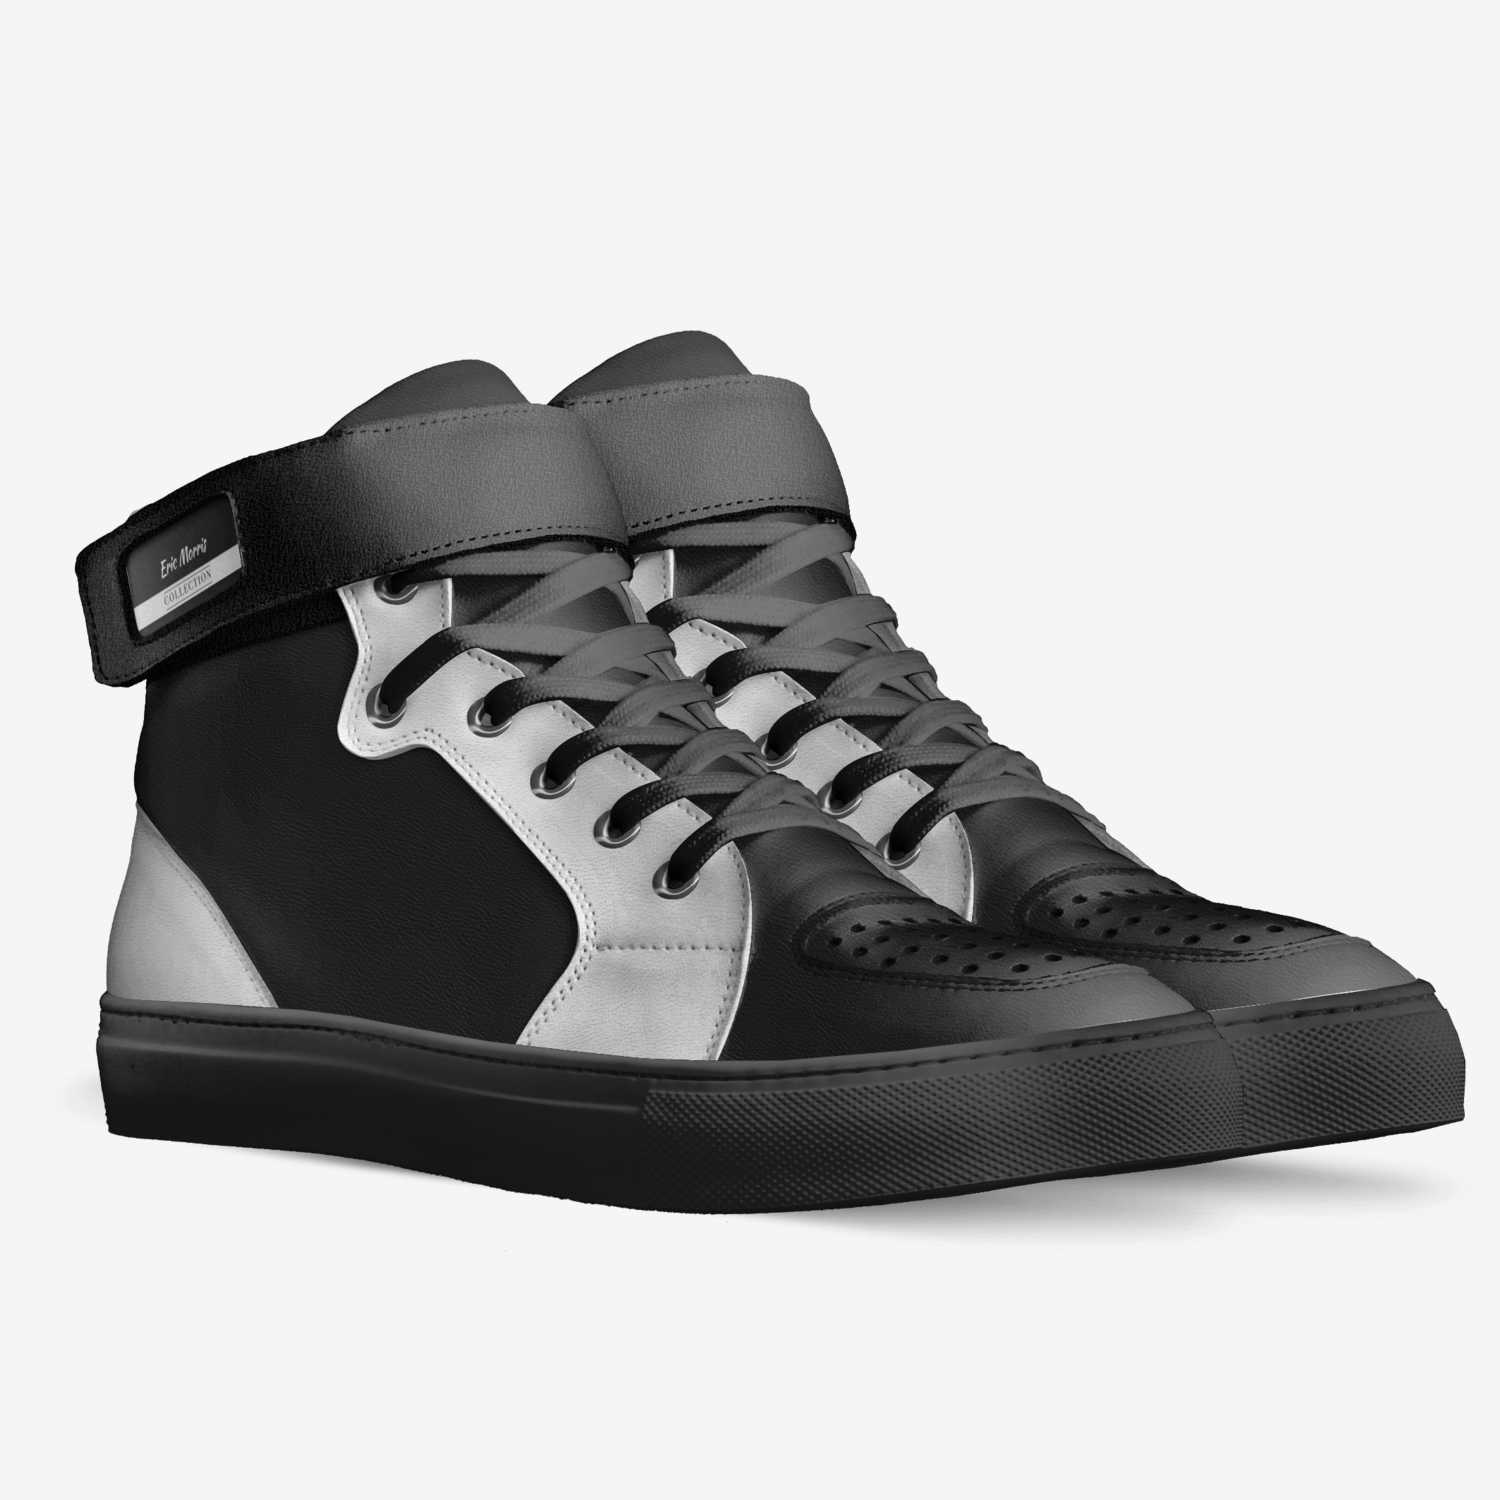 Eric Morris | A Custom Shoe concept by Eric Morris